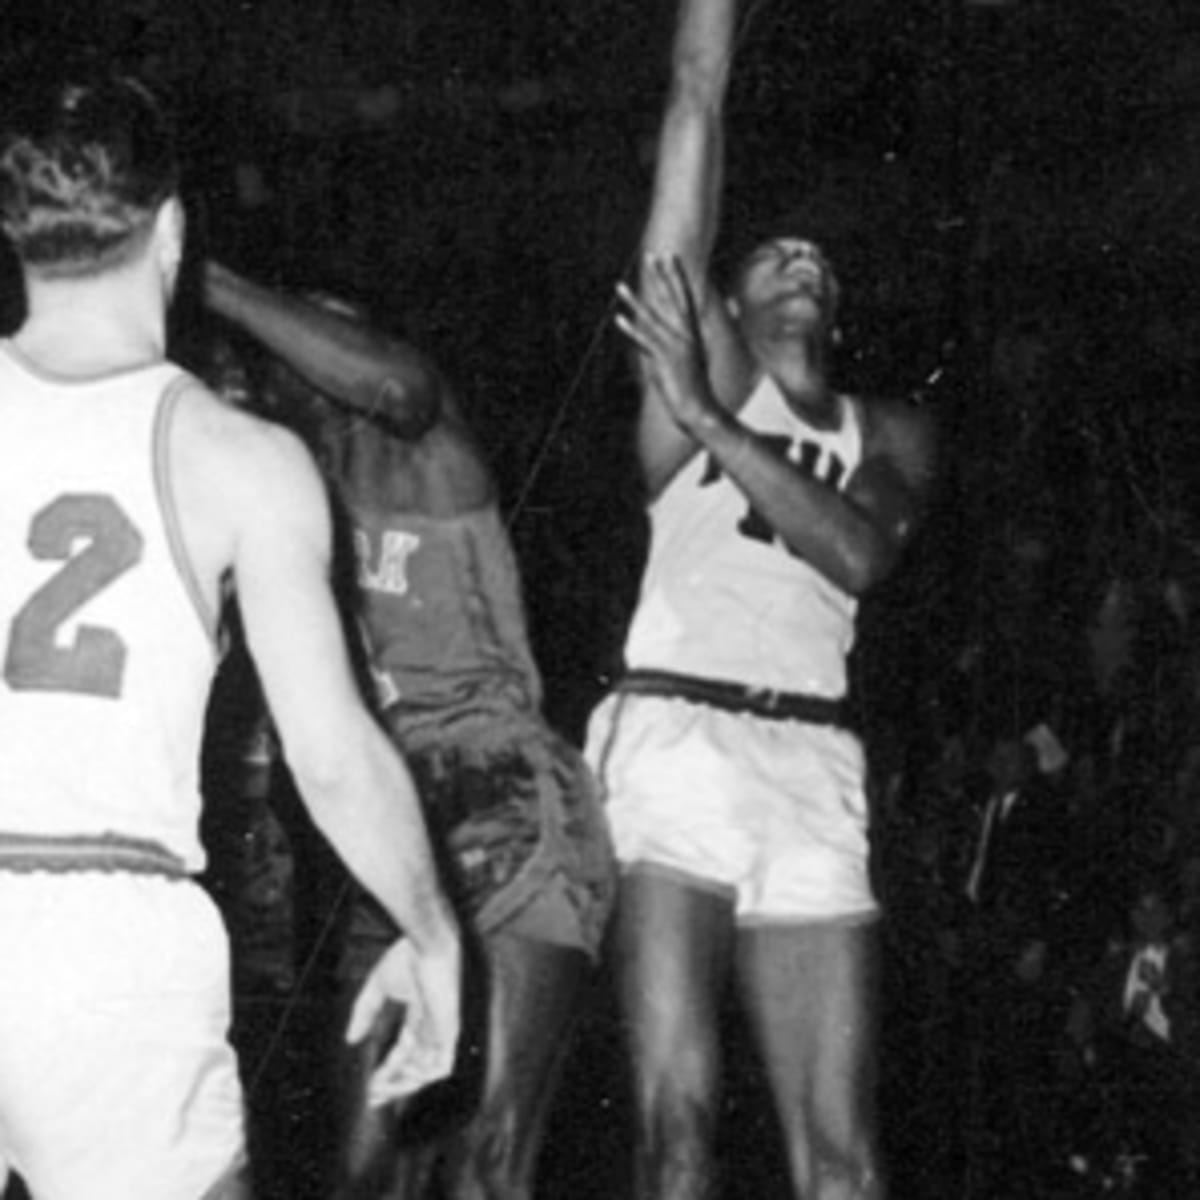 Top Moments: Wilt Chamberlain scores 100 in 1962 game vs. Knicks